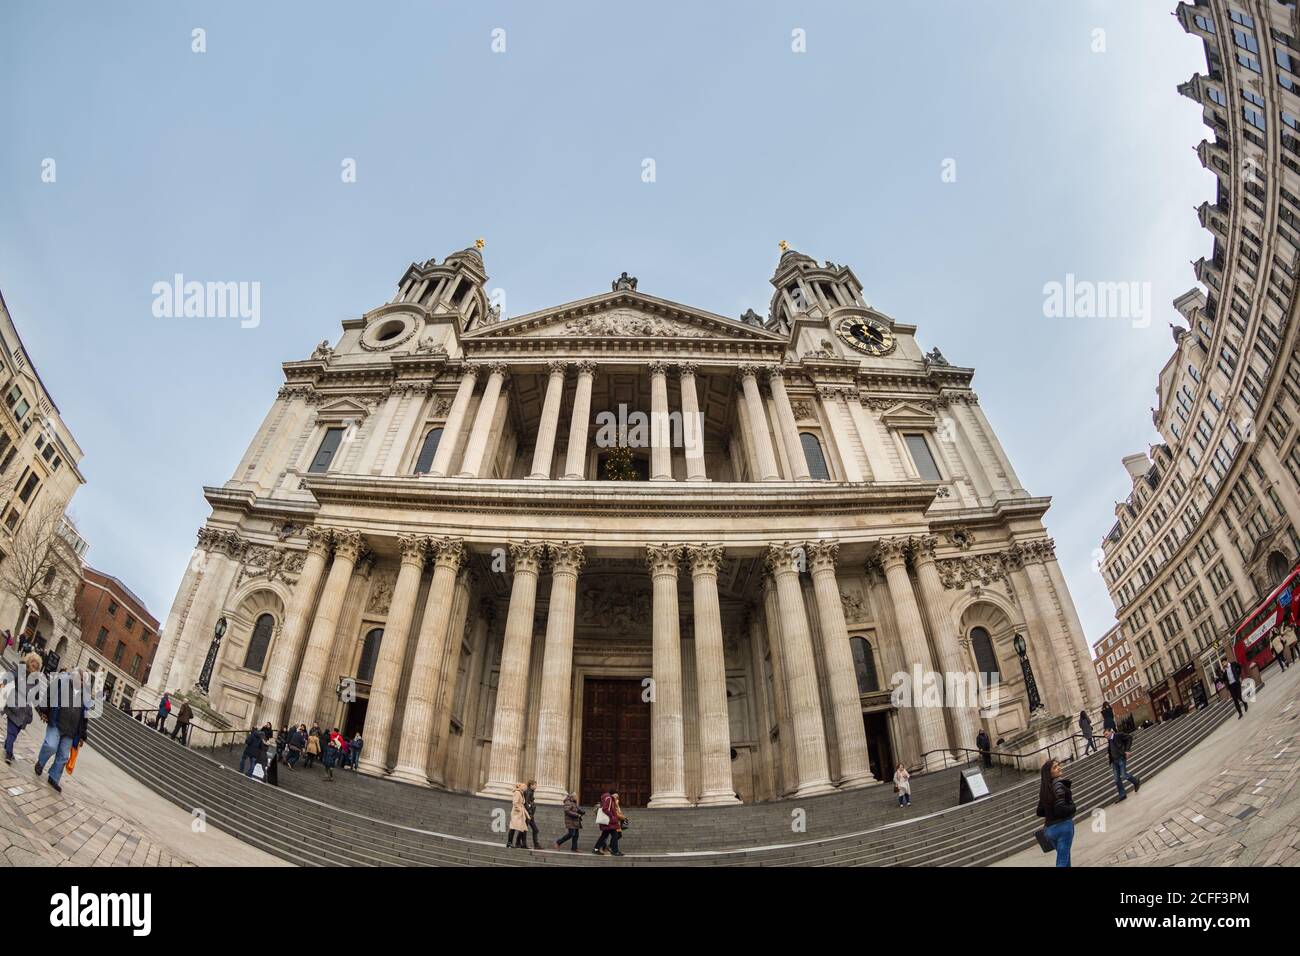 St Paul's Cathedral, iconic London landmark church, fish eye view, London, England, UK Stock Photo